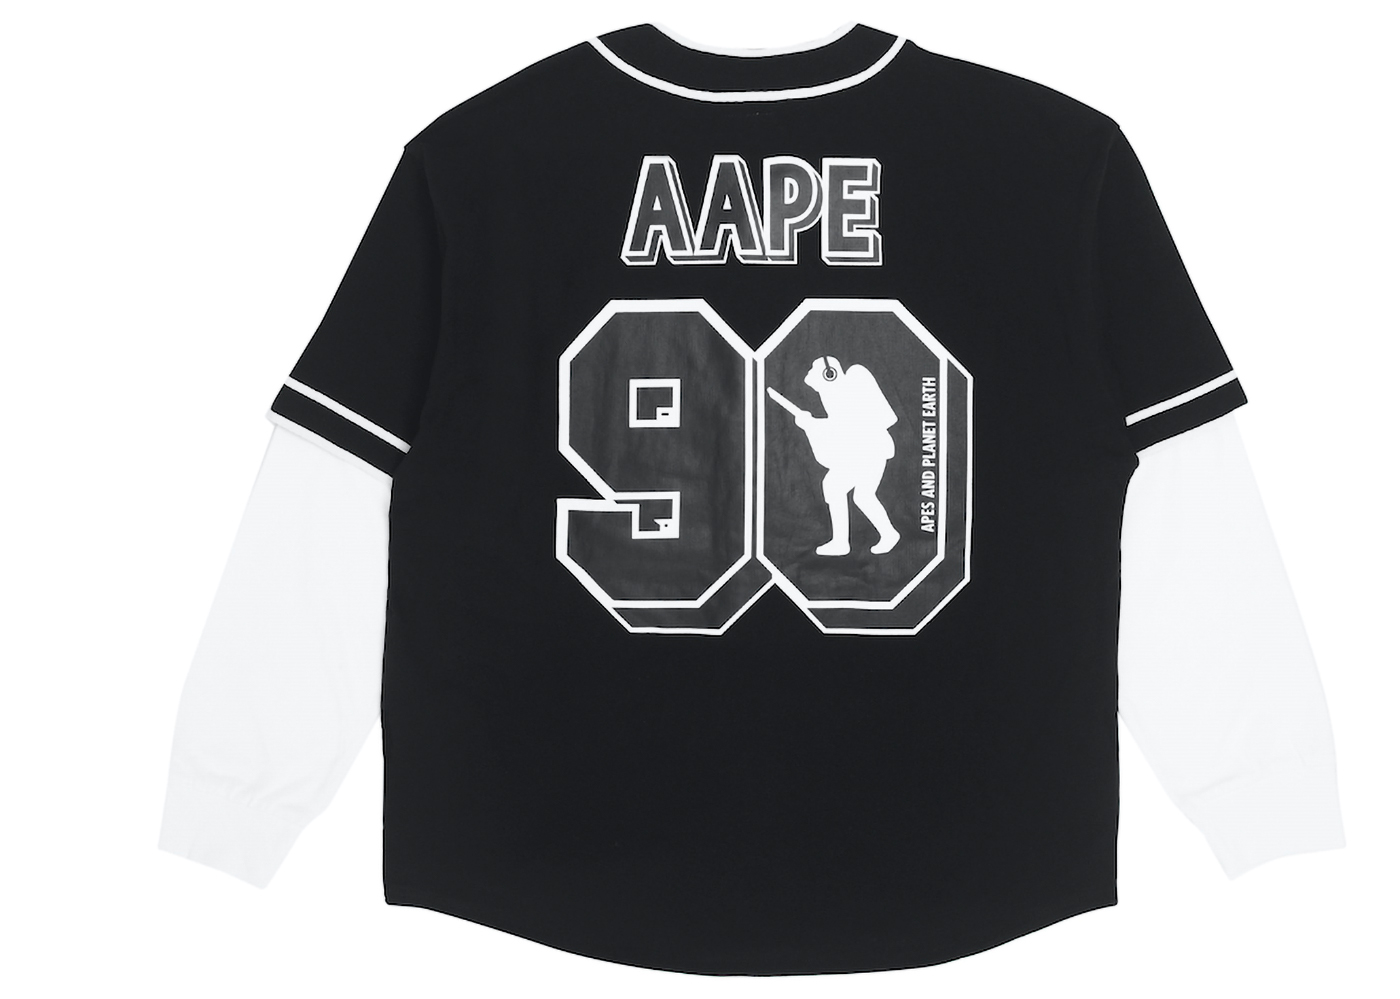 BAPE x 9090 Layered Baseball Shirt Black Men's - FW22 - US